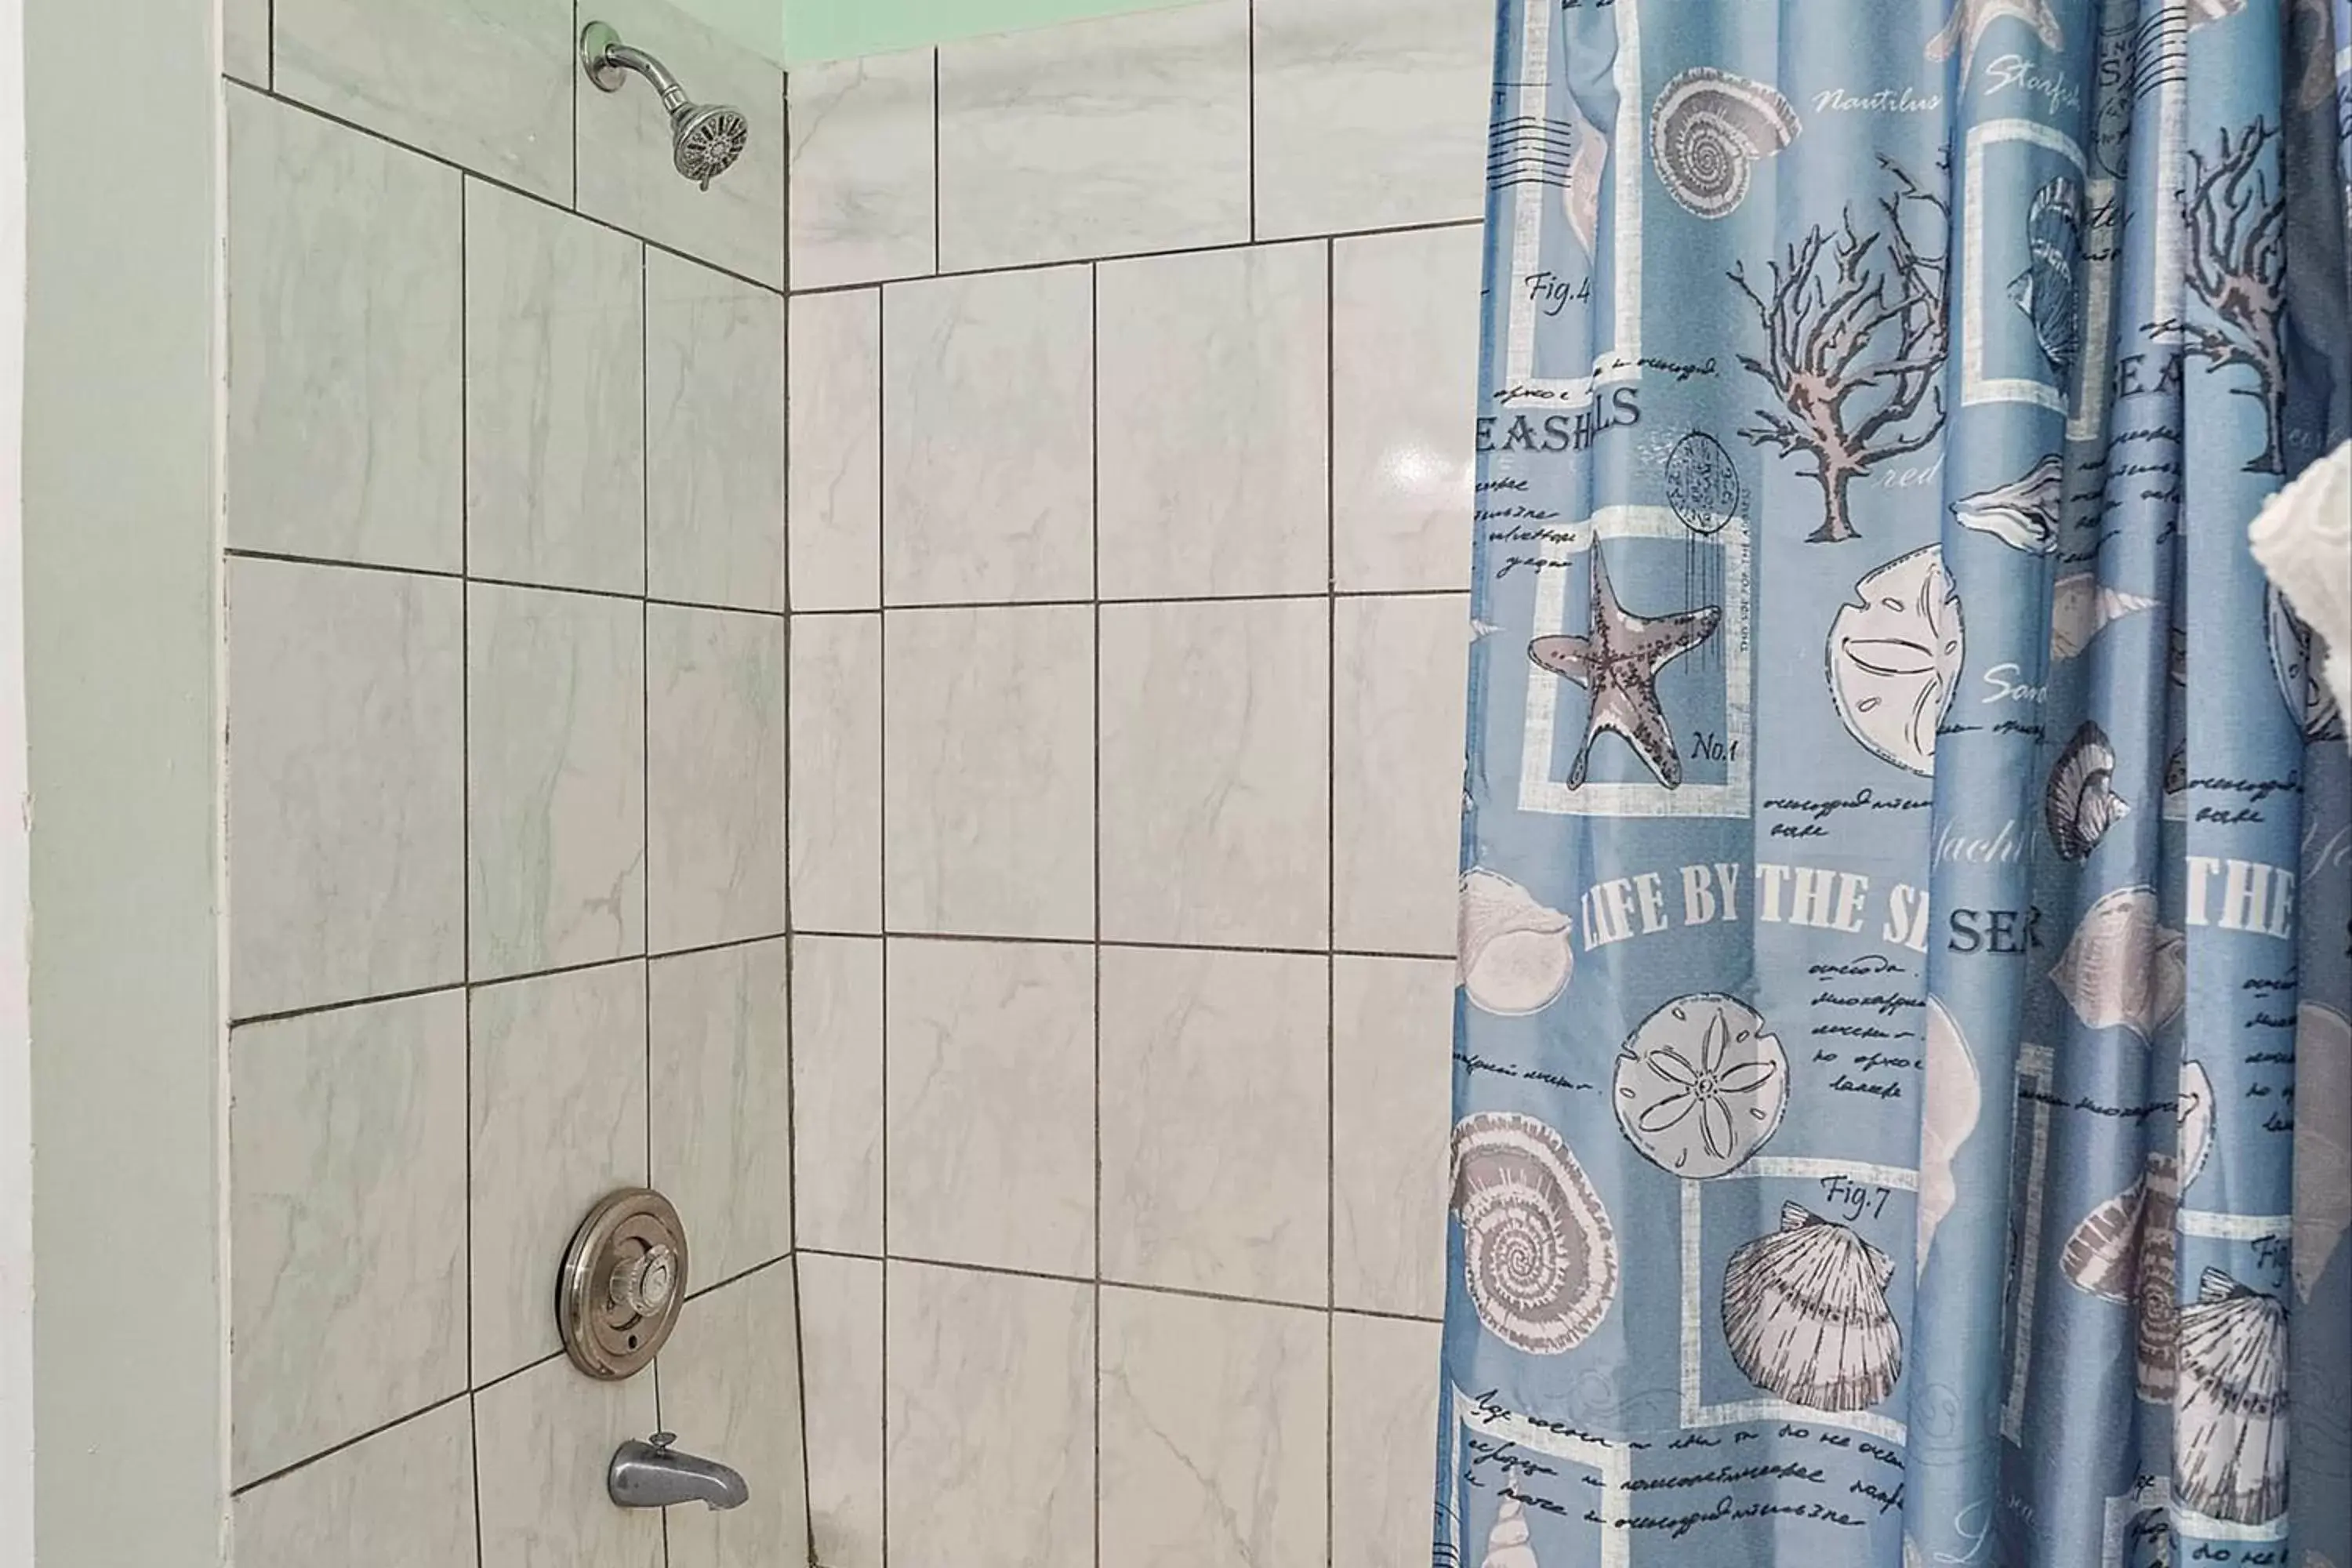 Shower, Bathroom in Malibu Resort Motel